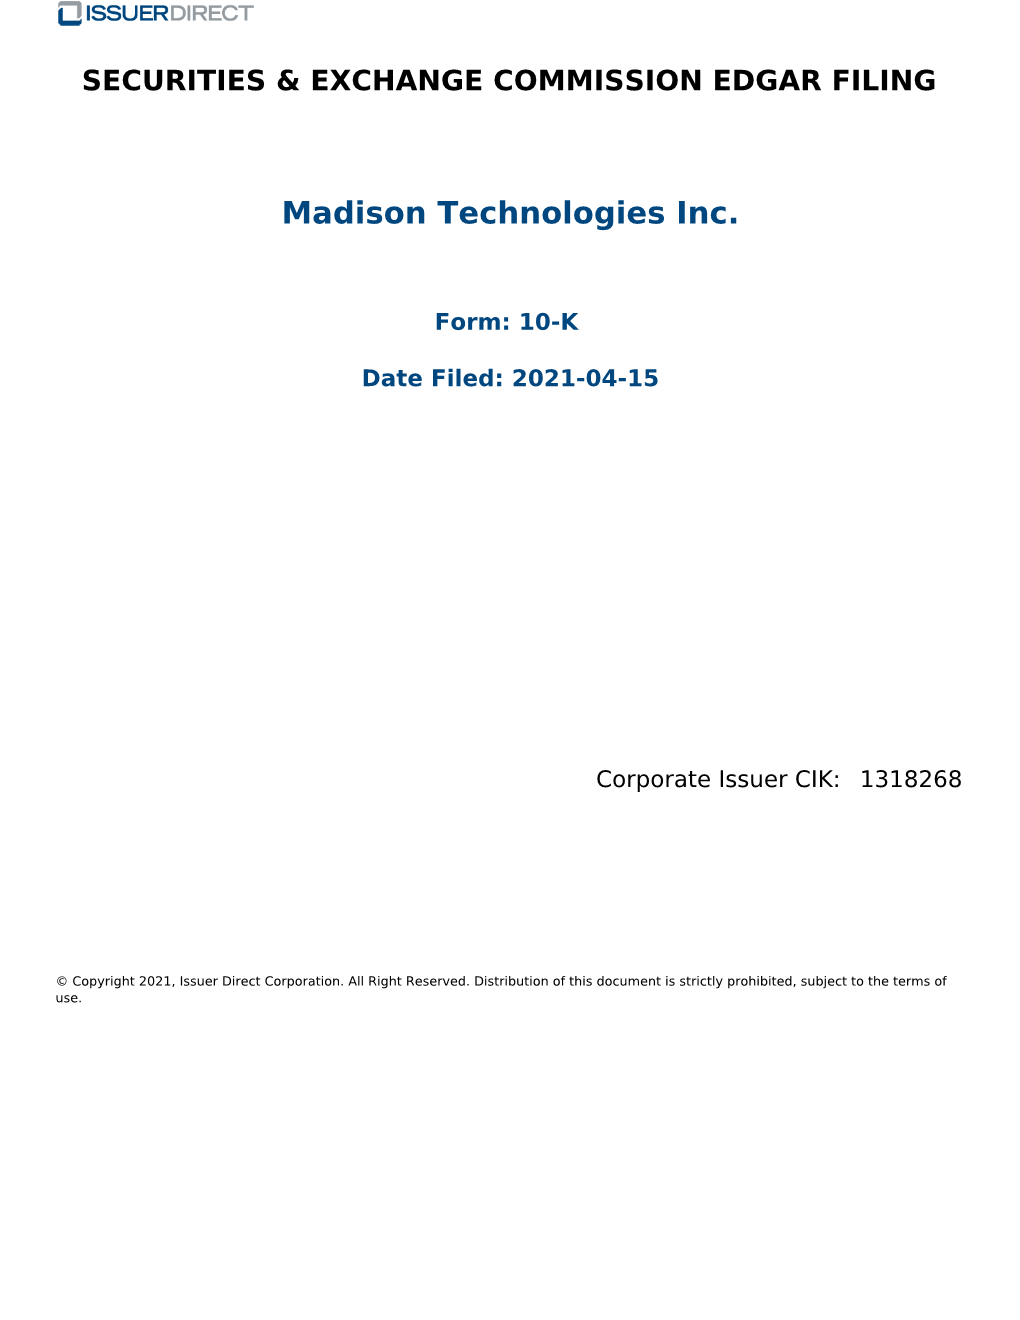 Madison Technologies Inc